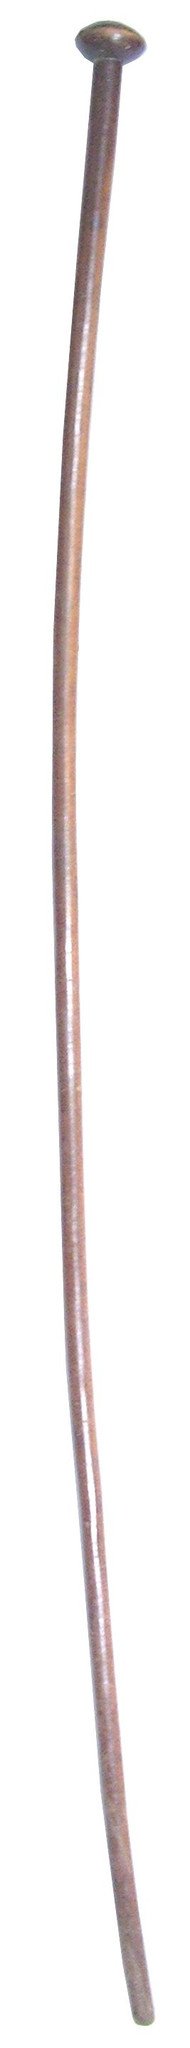 ZULU INDUNA'S STAFF C.1850-70 - Fagan Arms